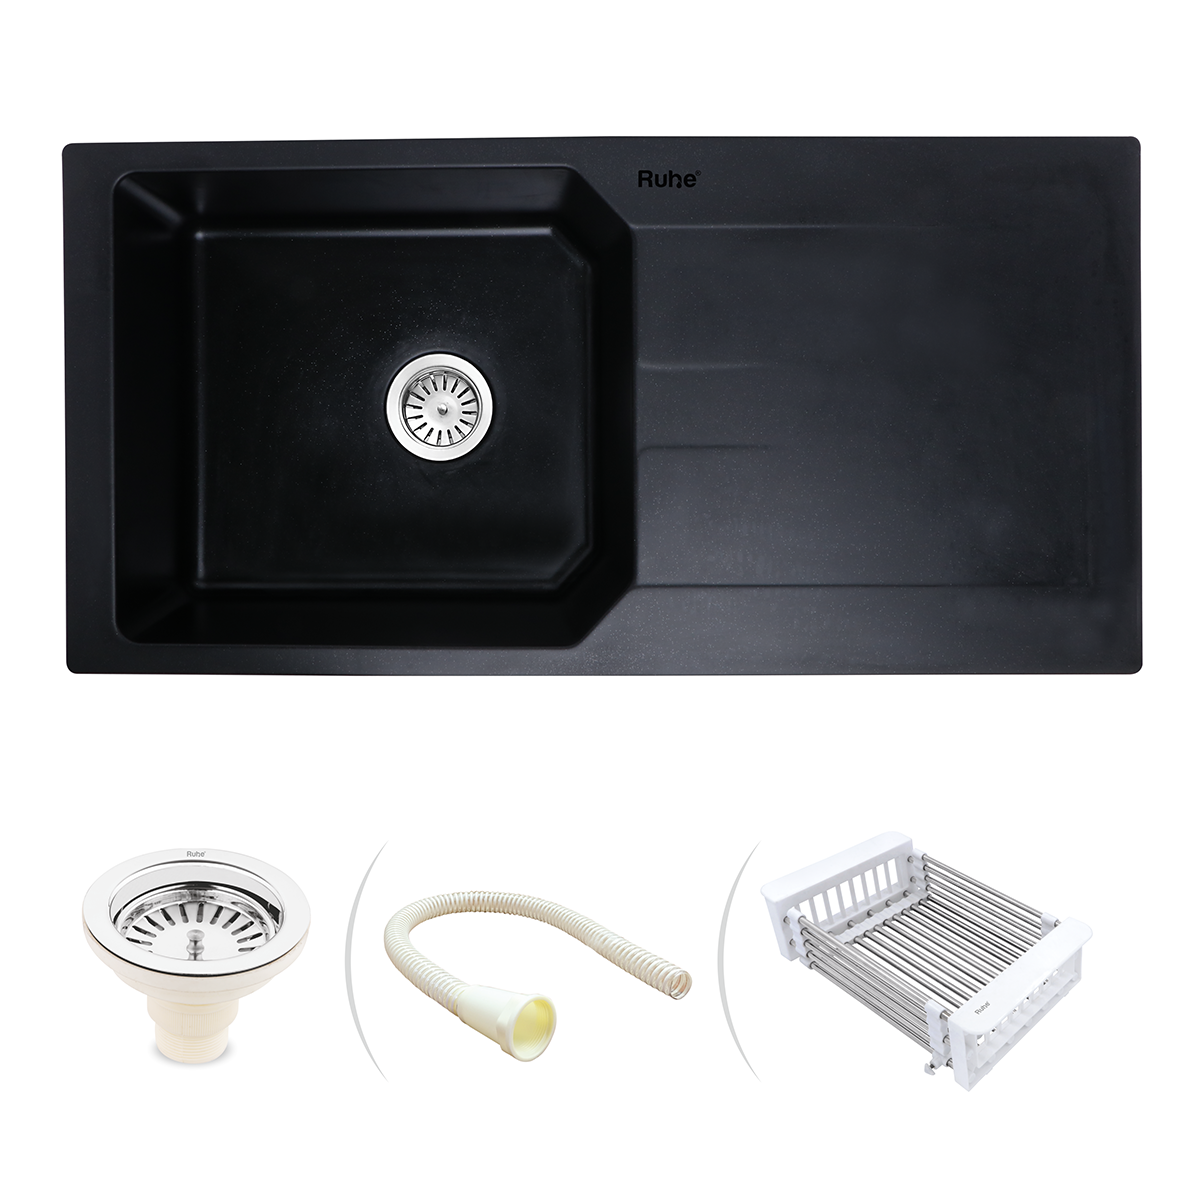 Quartz Single Bowl with Drainboard Kitchen Sink - Matte Black (39 x 20 x 9 inches) - by Ruhe®